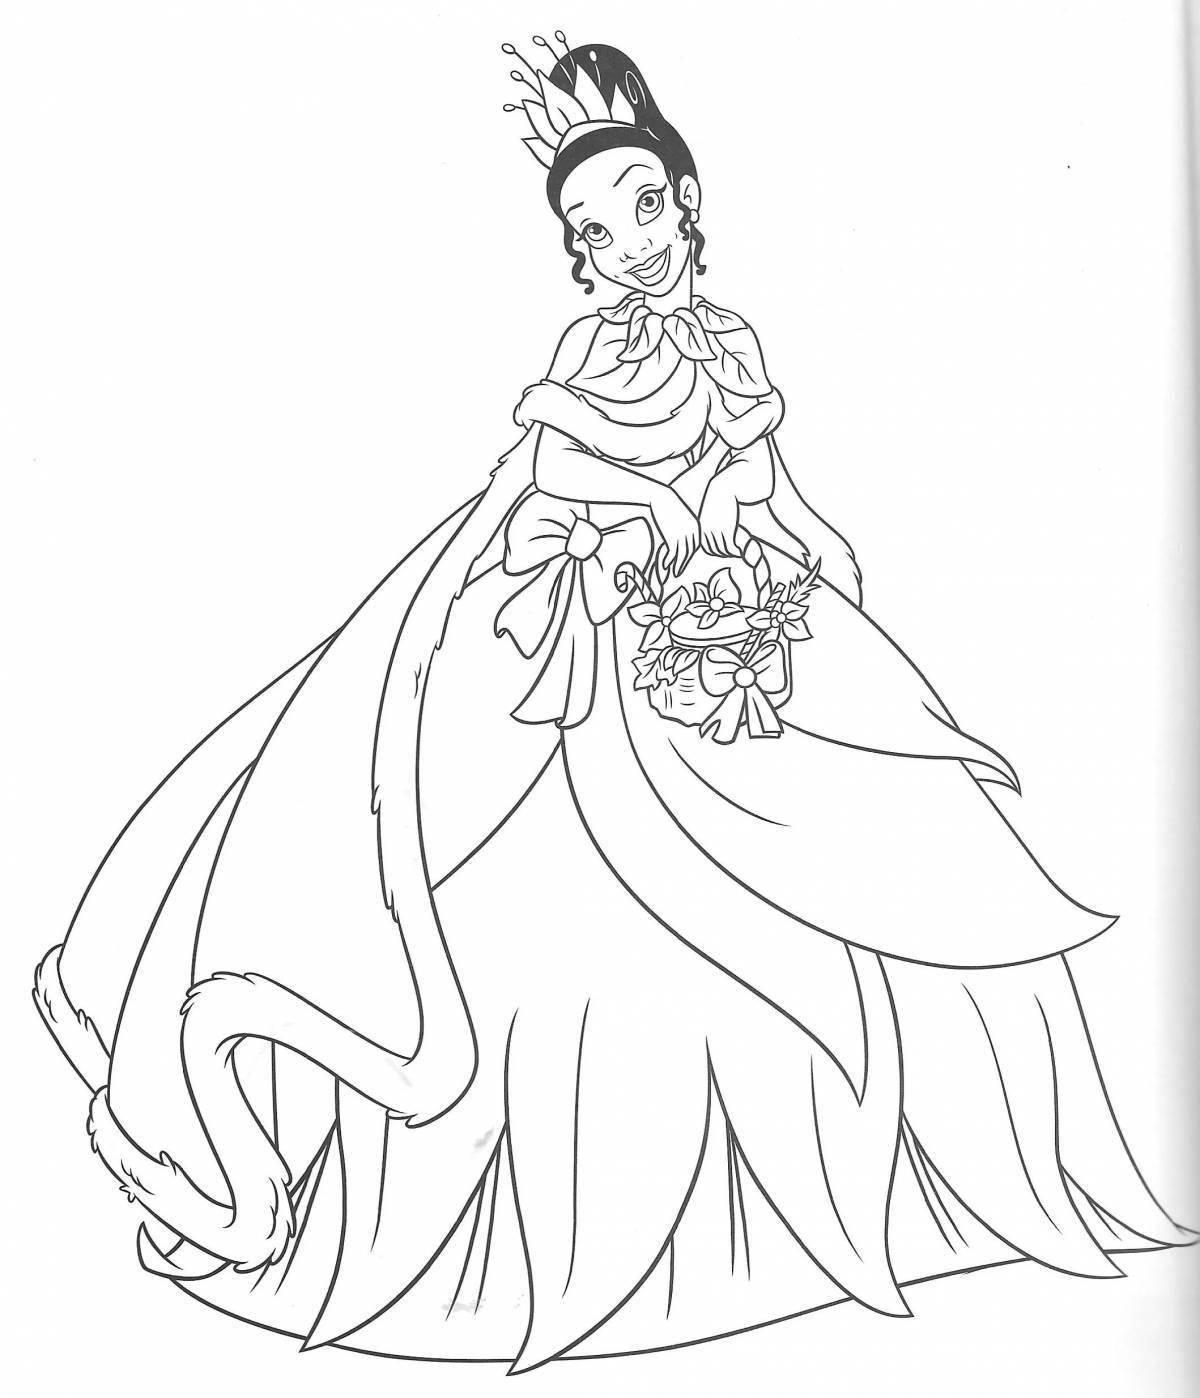 Charming diana princess coloring book